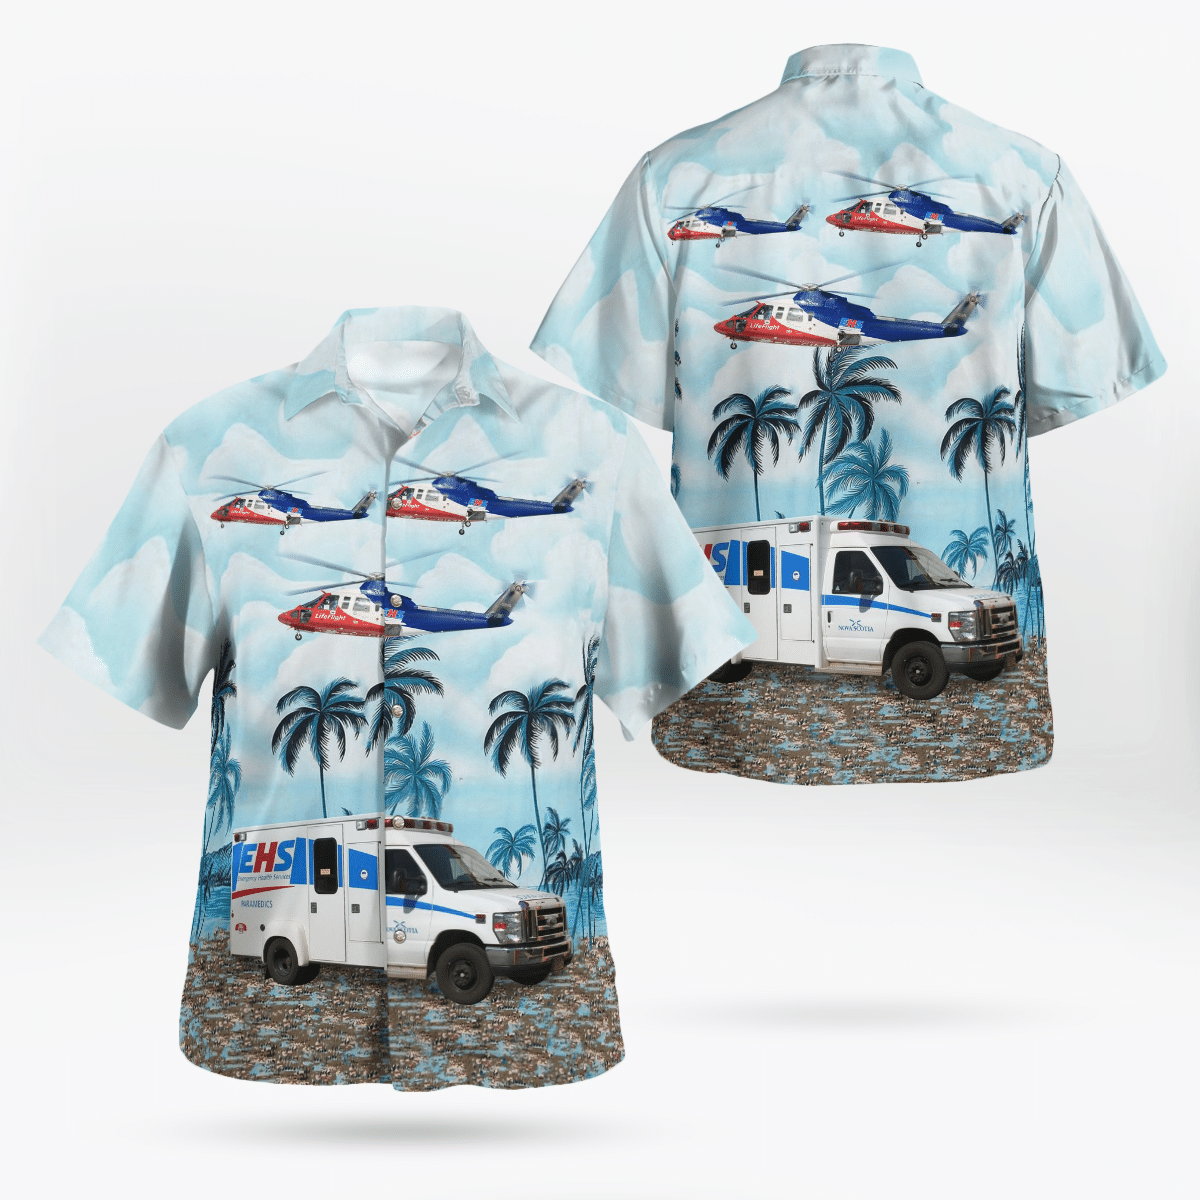 Why don't you order Hot Hawaiian Shirt today? 379